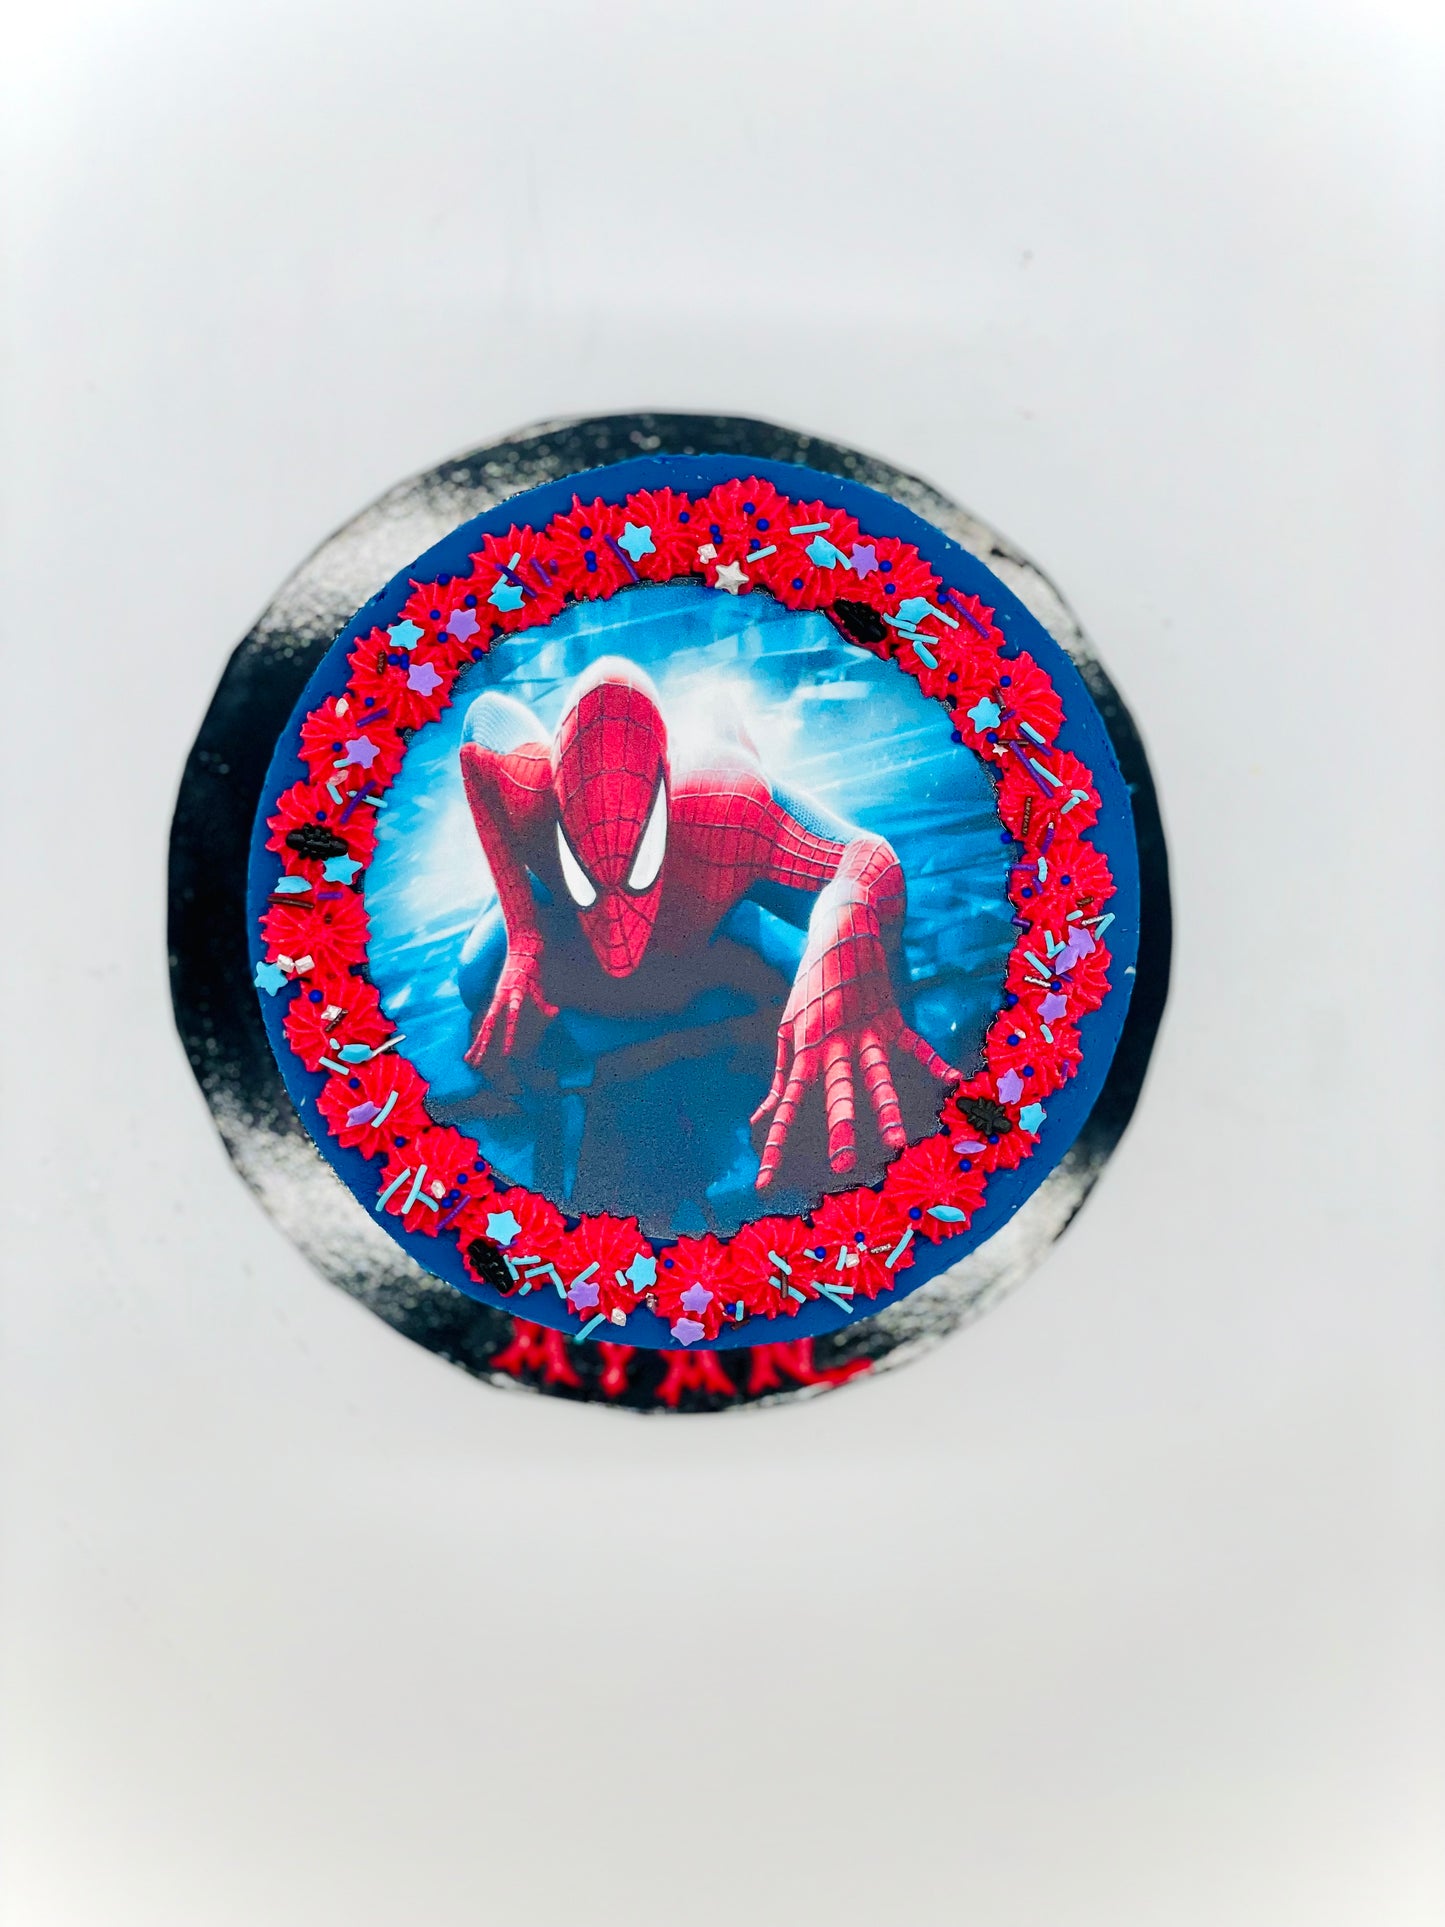 Spiderman Photo Cake